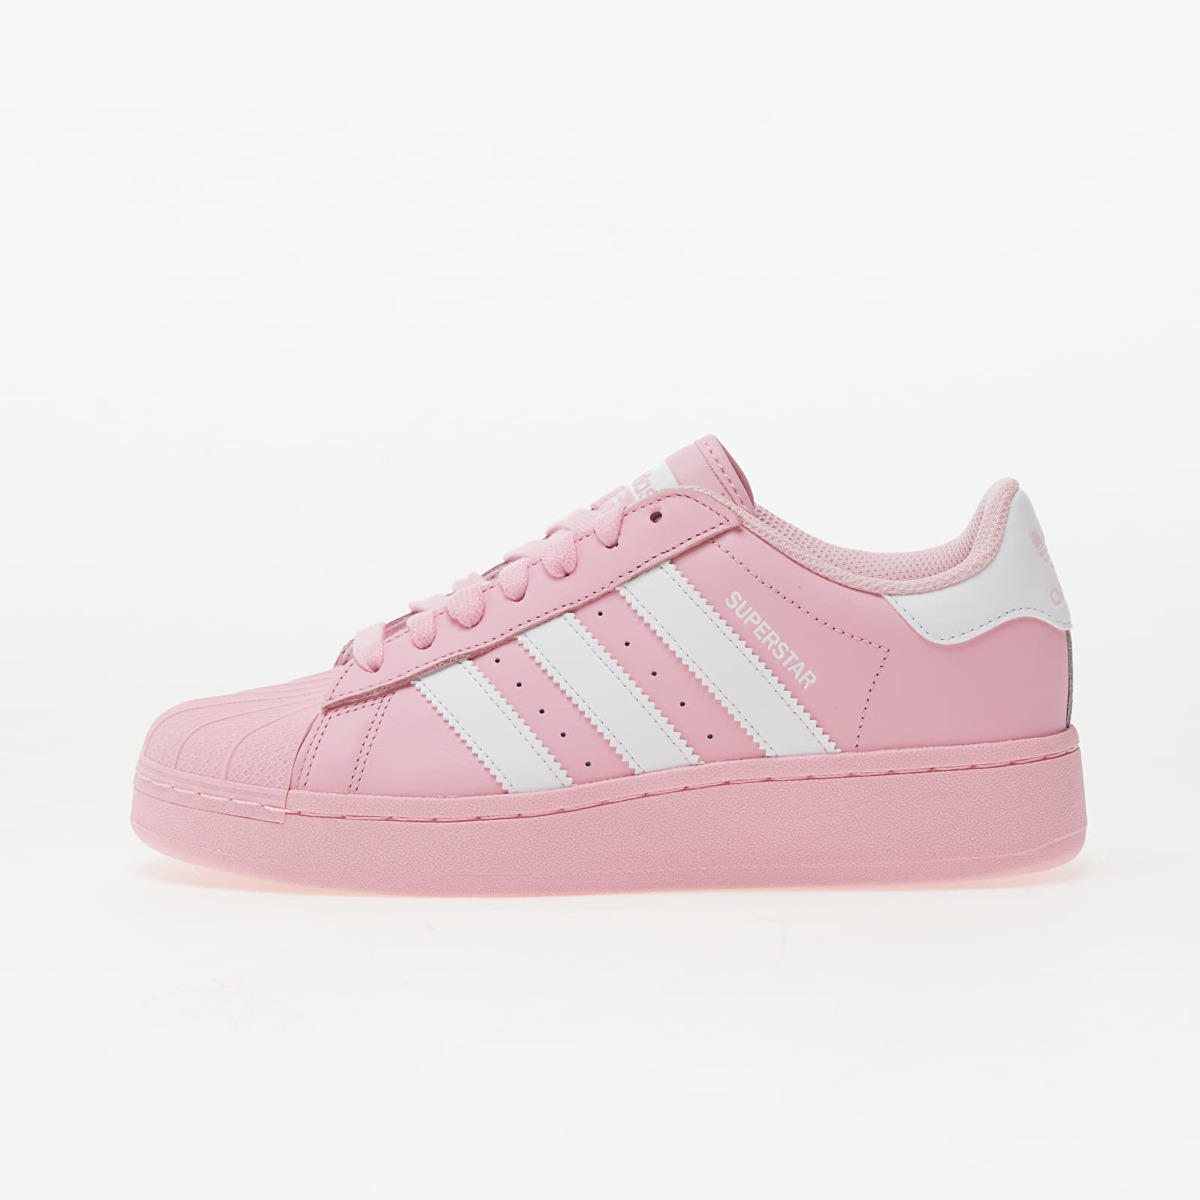 Adidas - Lady Superstars - Pink - Footshop GOOFASH